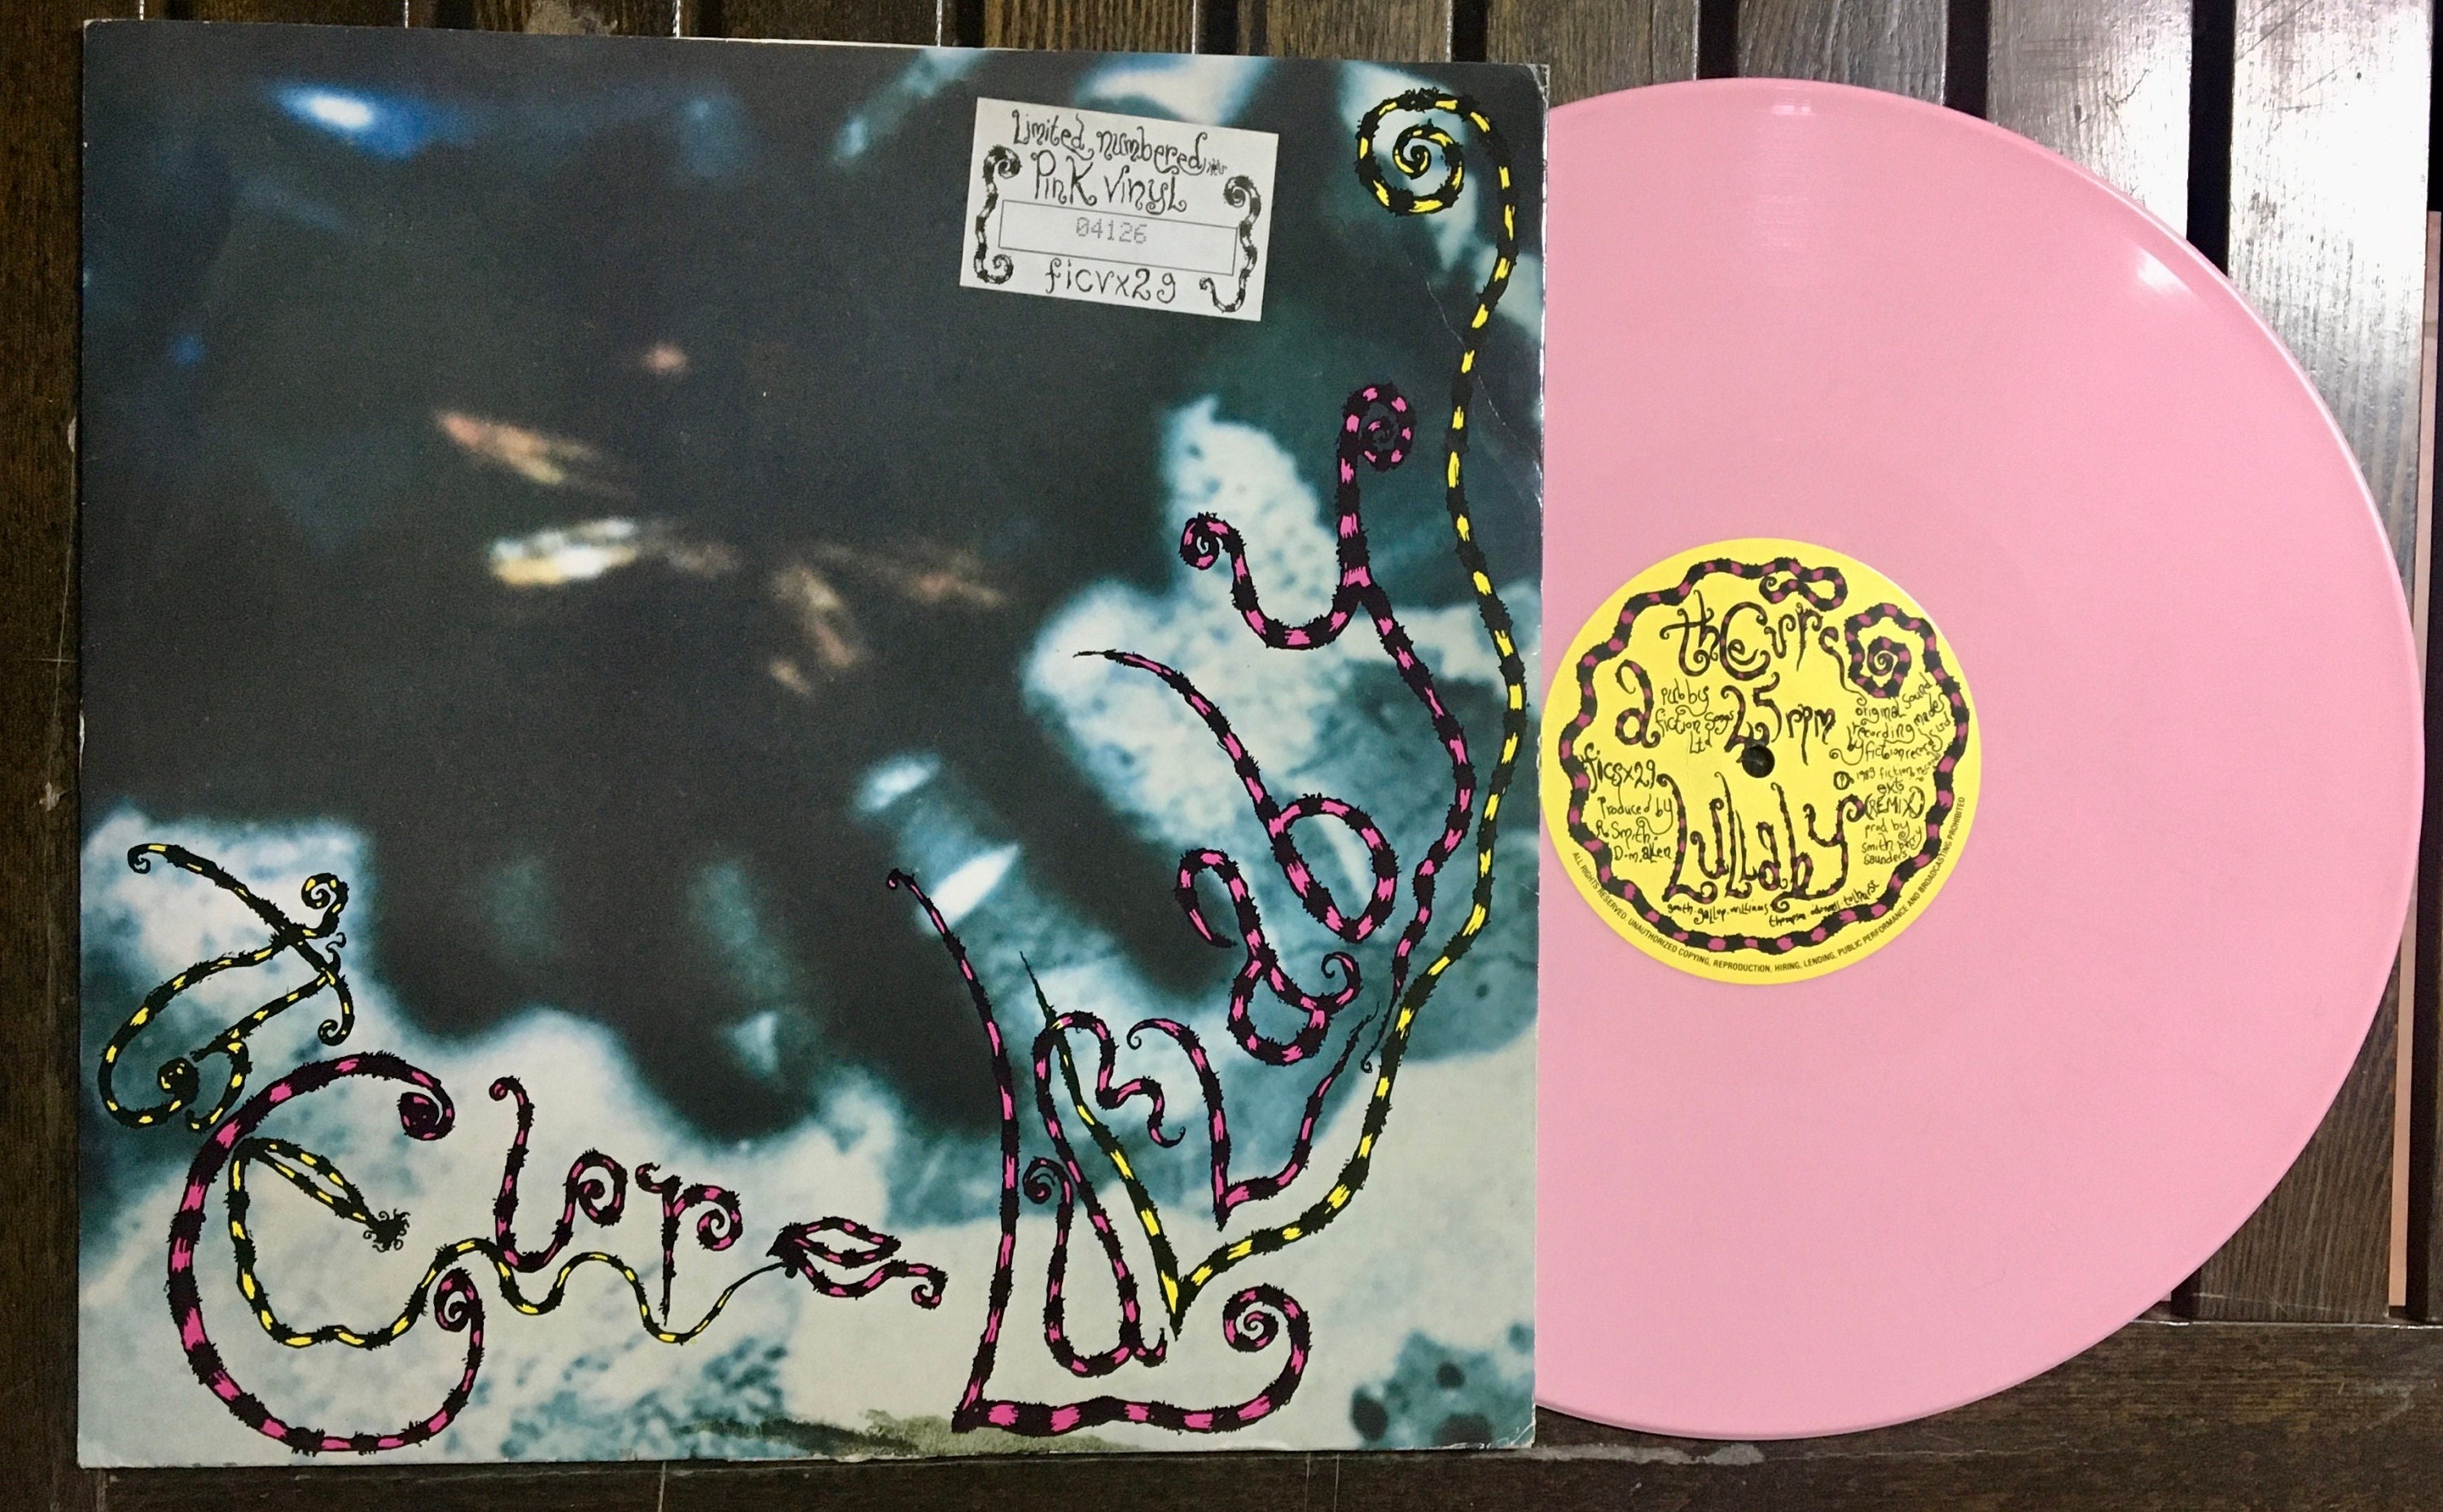 1989 The Cure Lullaby, Vinilo, 12, 45 RPM, Sencillo, Edición Limitada,  Numerado, Rosa -  México